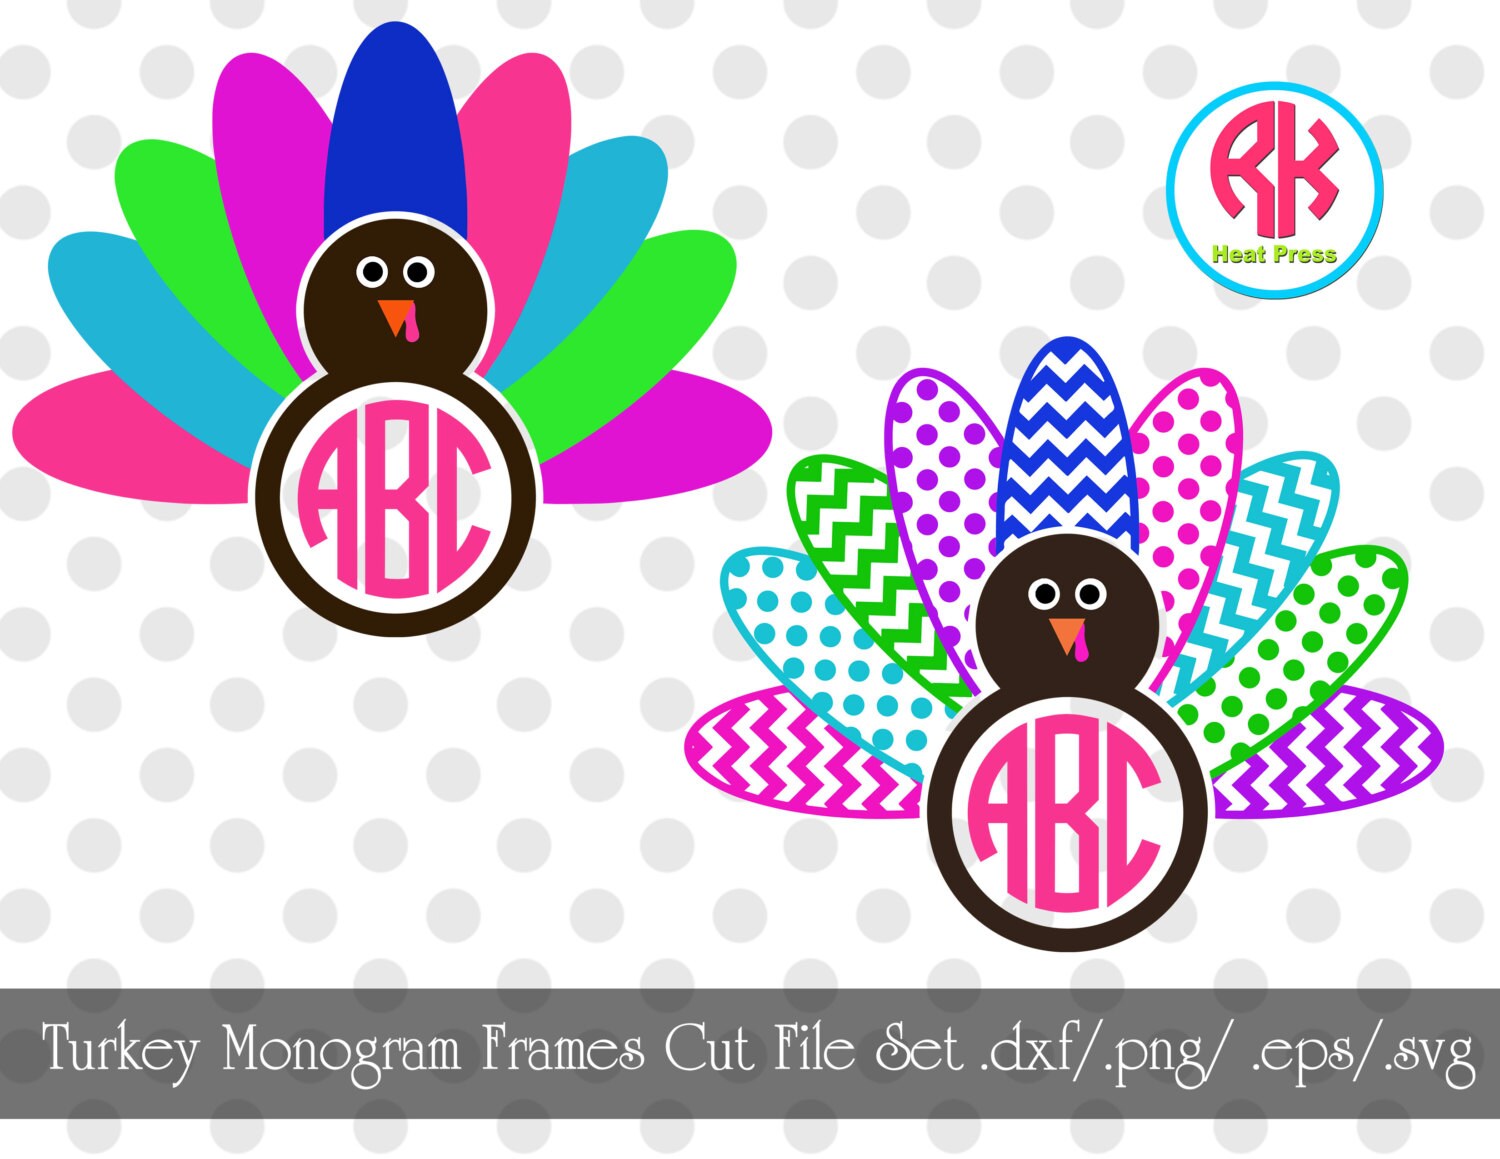 Download Turkey Monogram Frame Cut File Set by RKHeatPress on Etsy